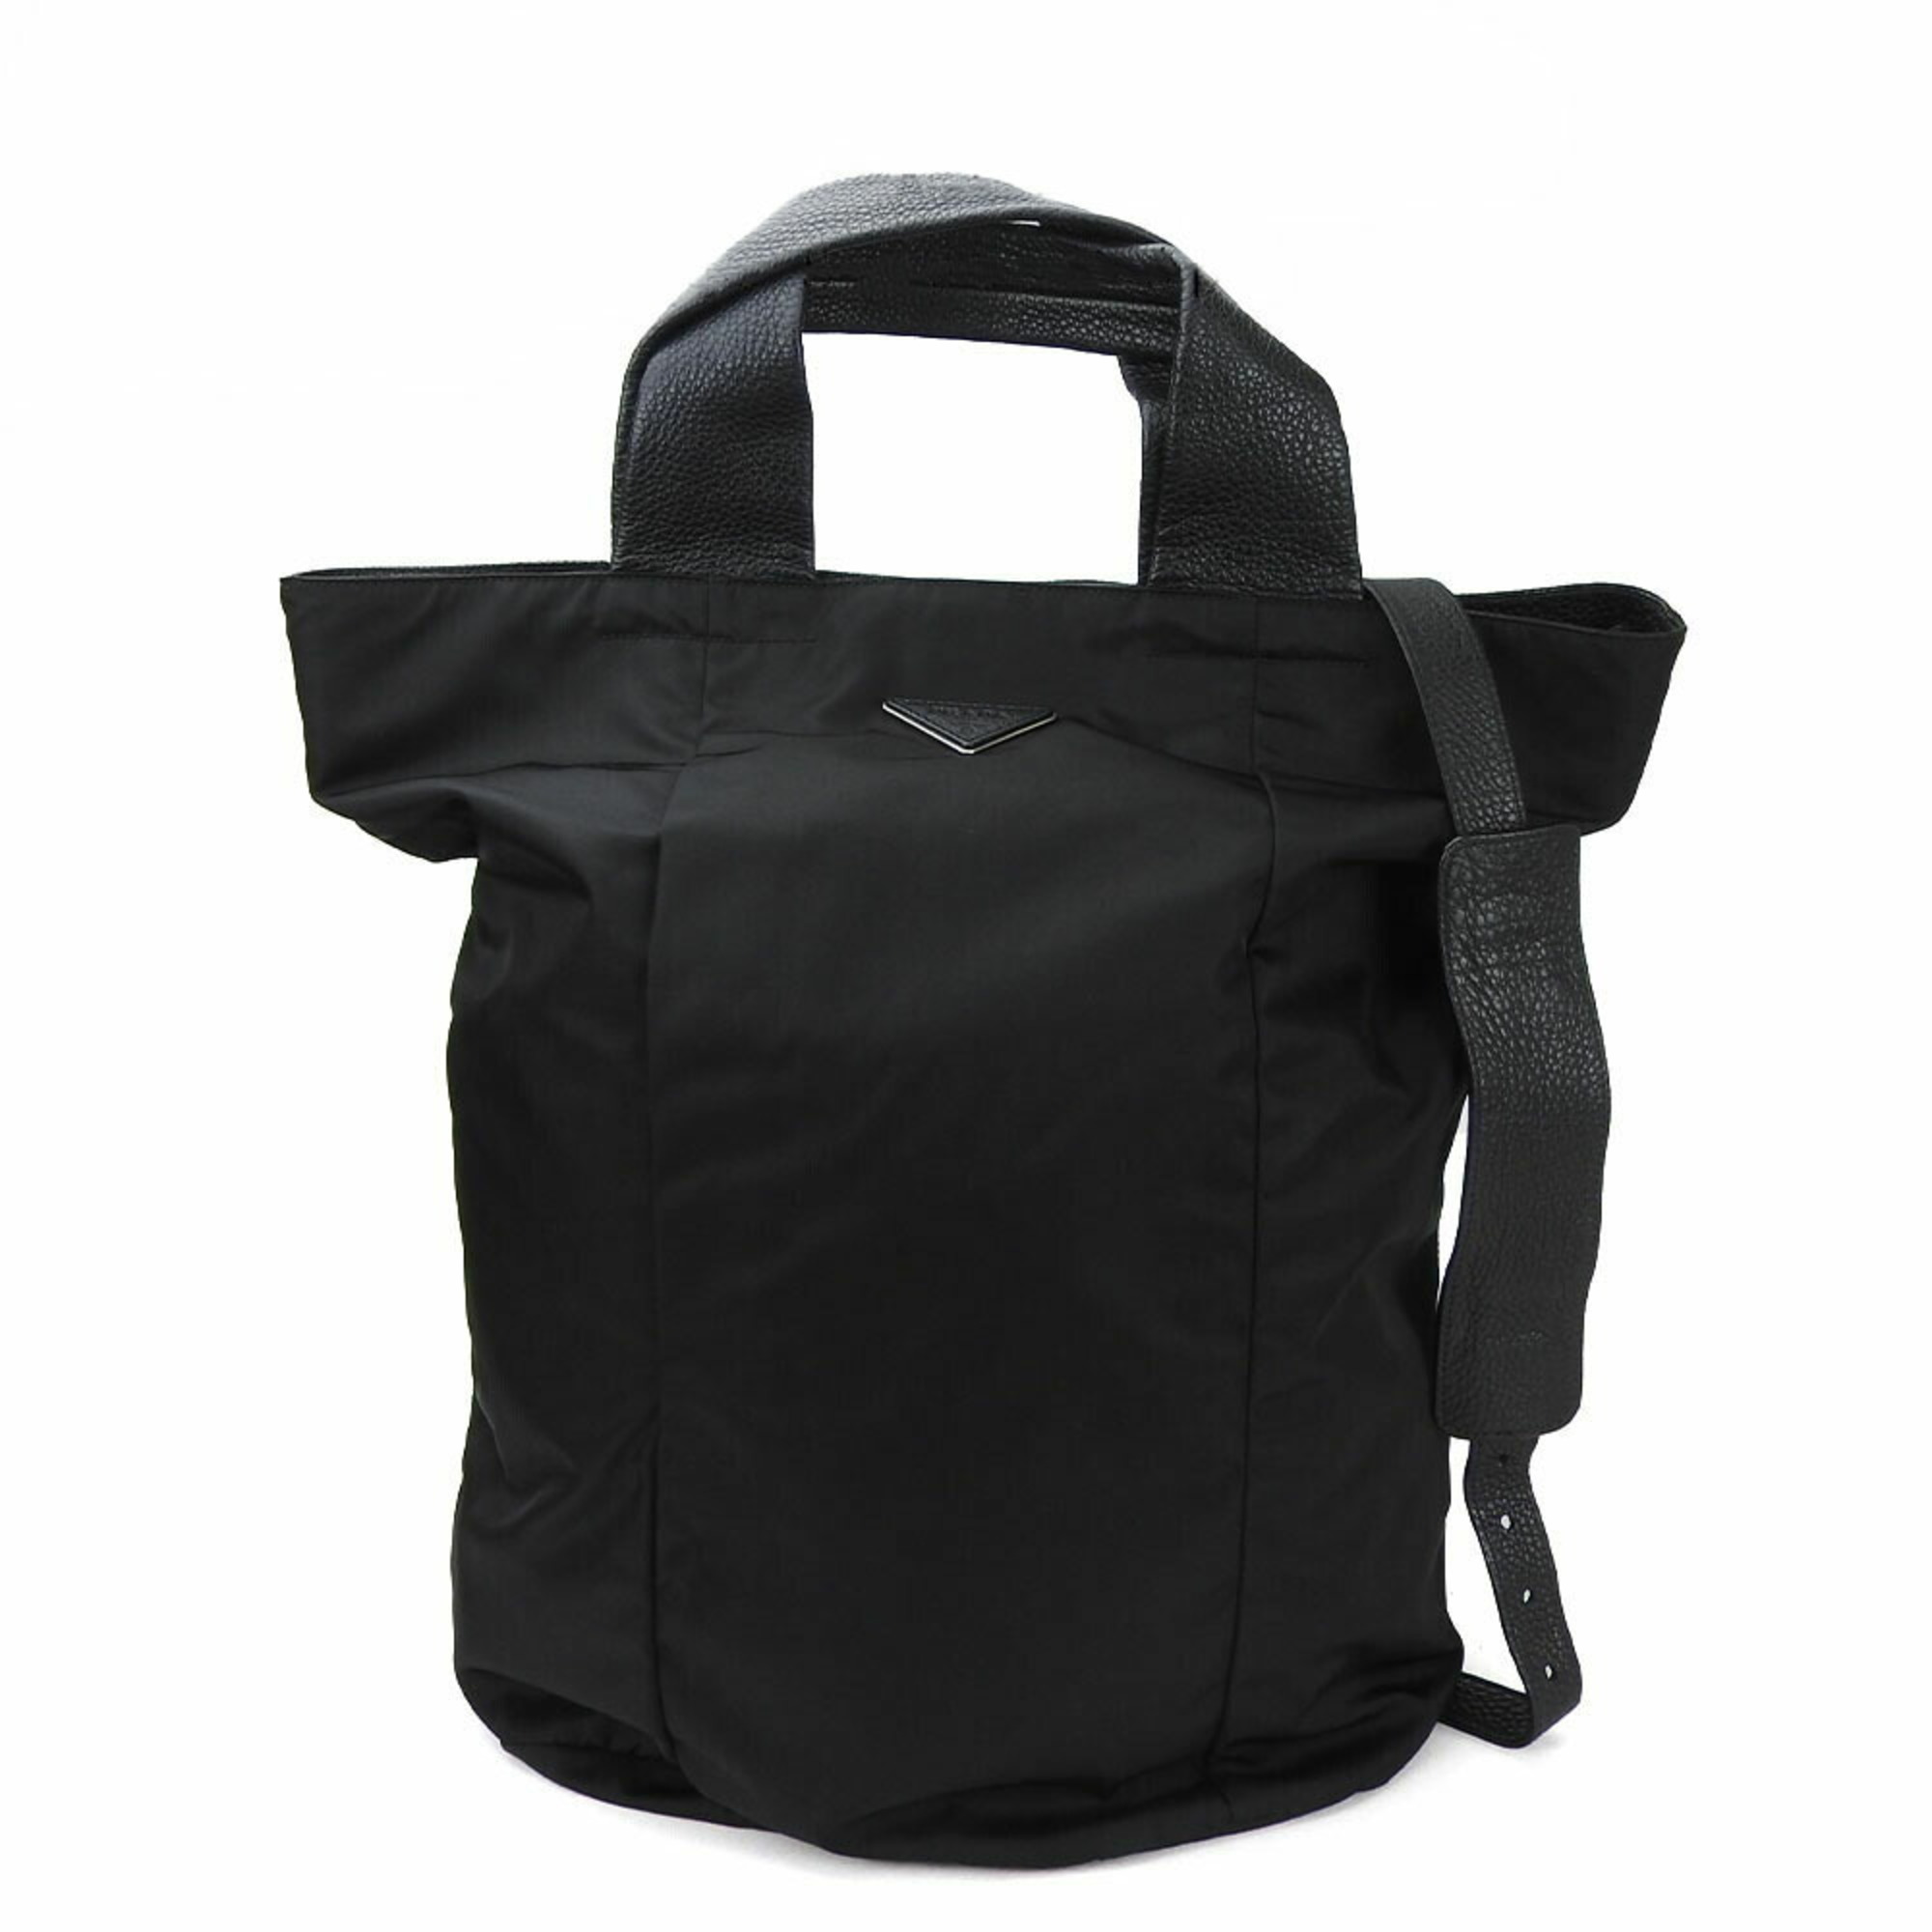 Prada tote bag shoulder large nylon black leather ladies PRADA NERO